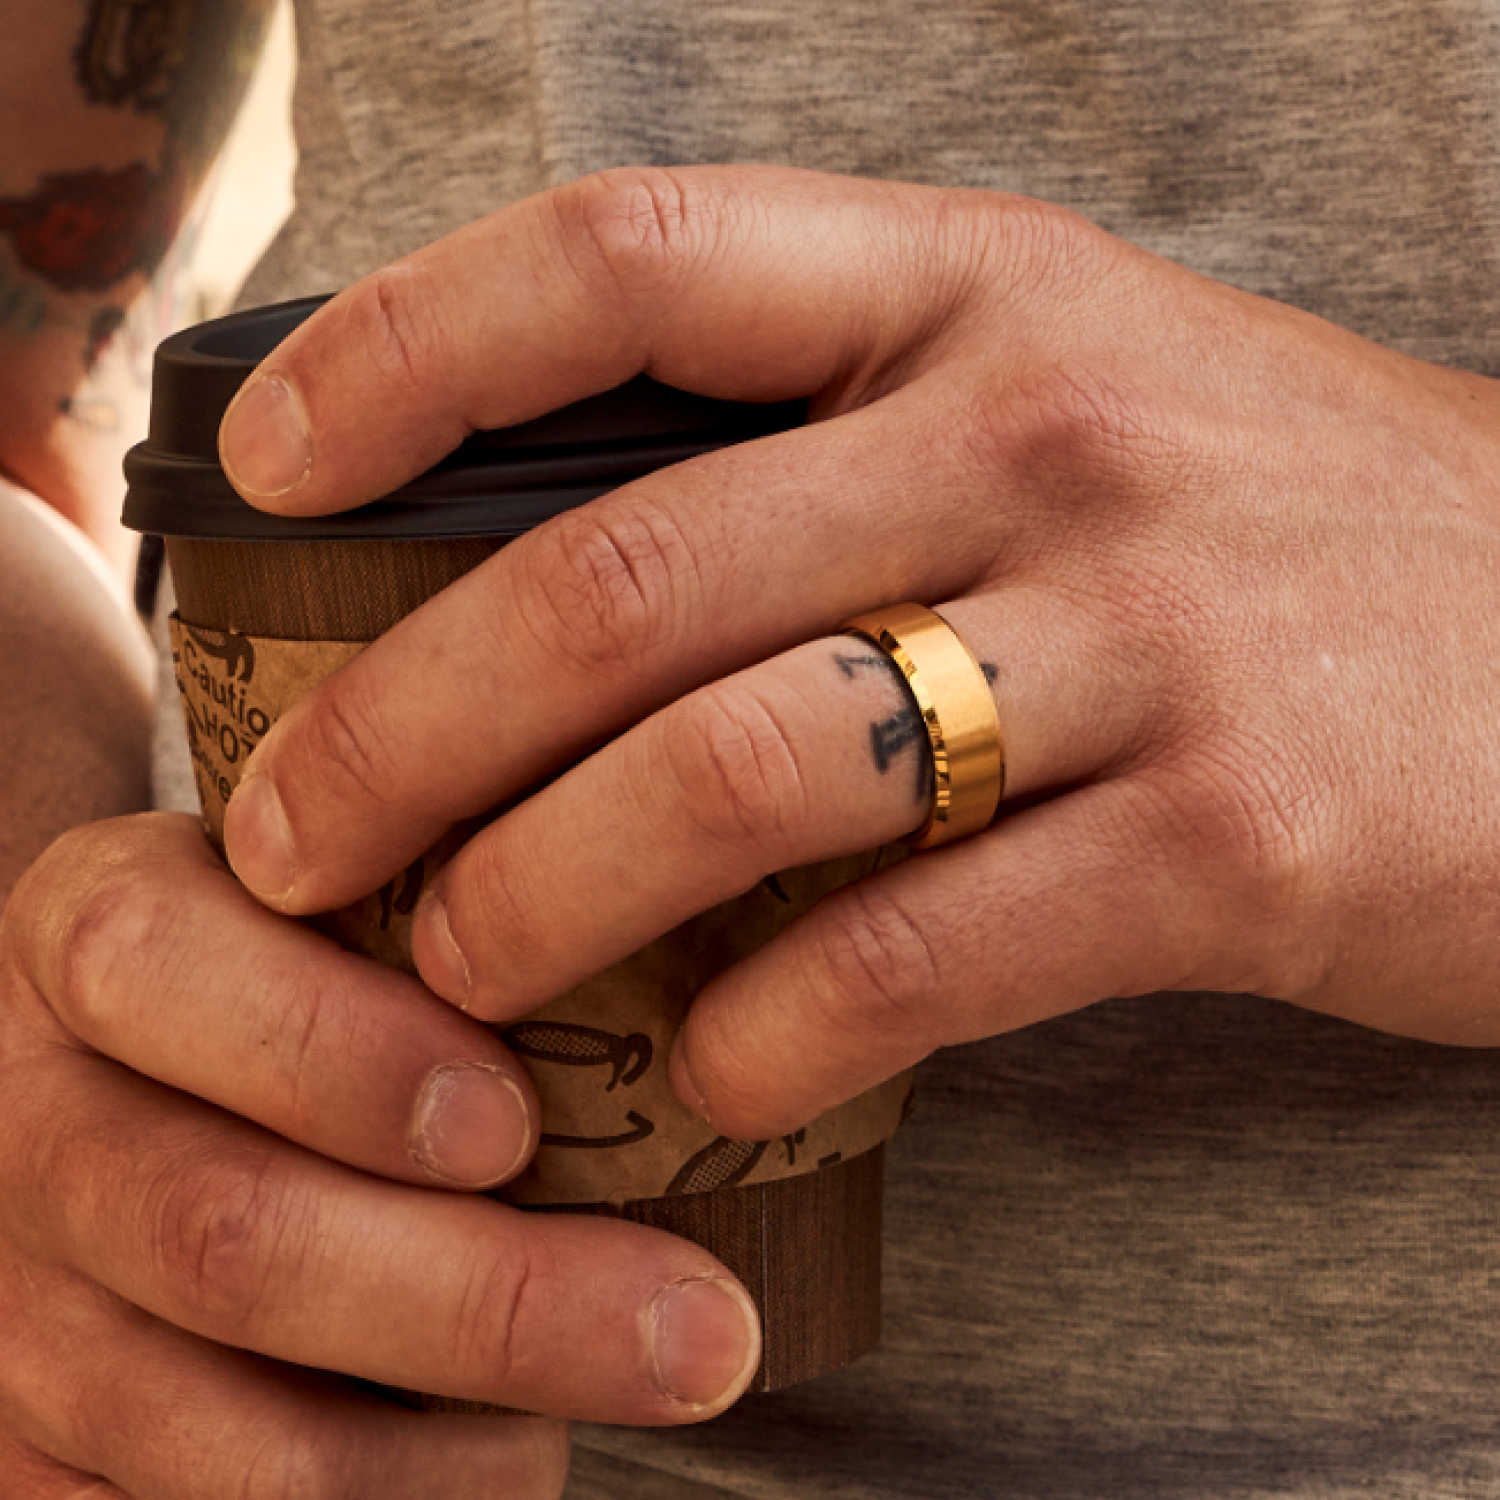 24k gold rings designed for gentlemen who appreciate fine craftsmanship.  Inspired by 15th-century artisans, the Palmette Ring boasts… | Instagram